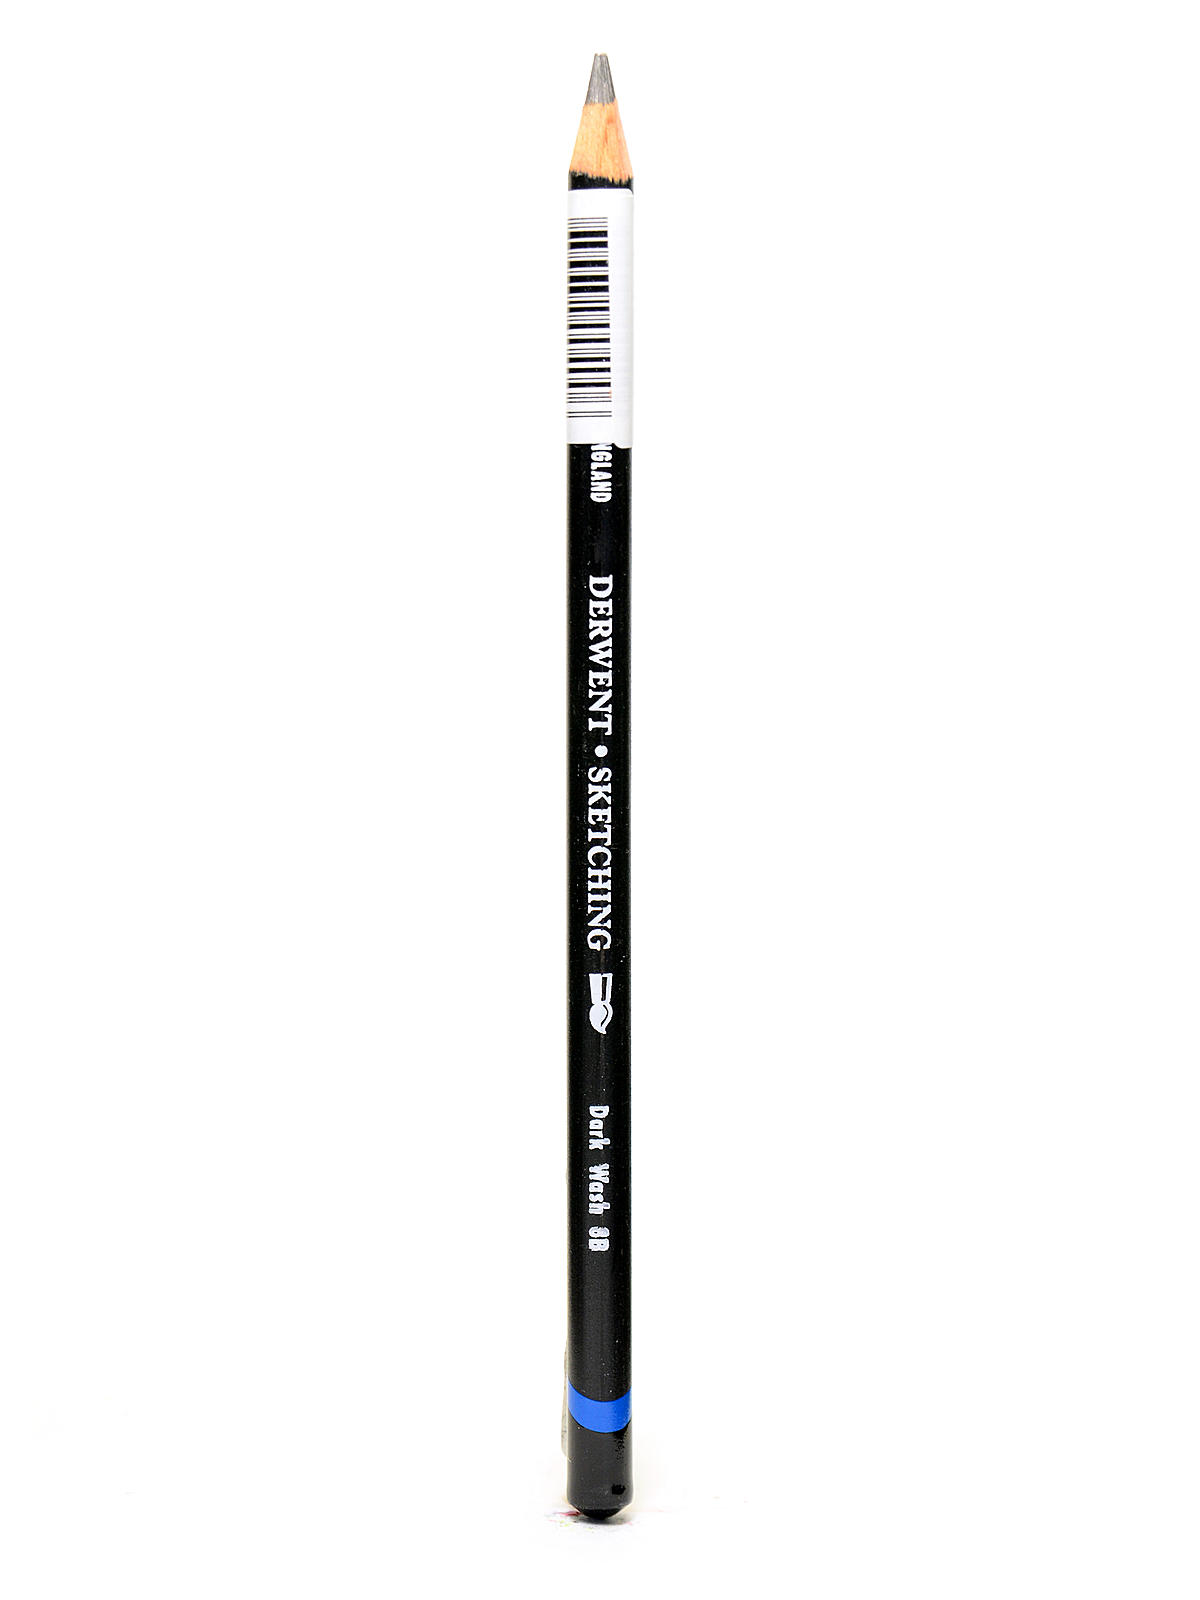 Water-soluble Sketching Pencils 8B